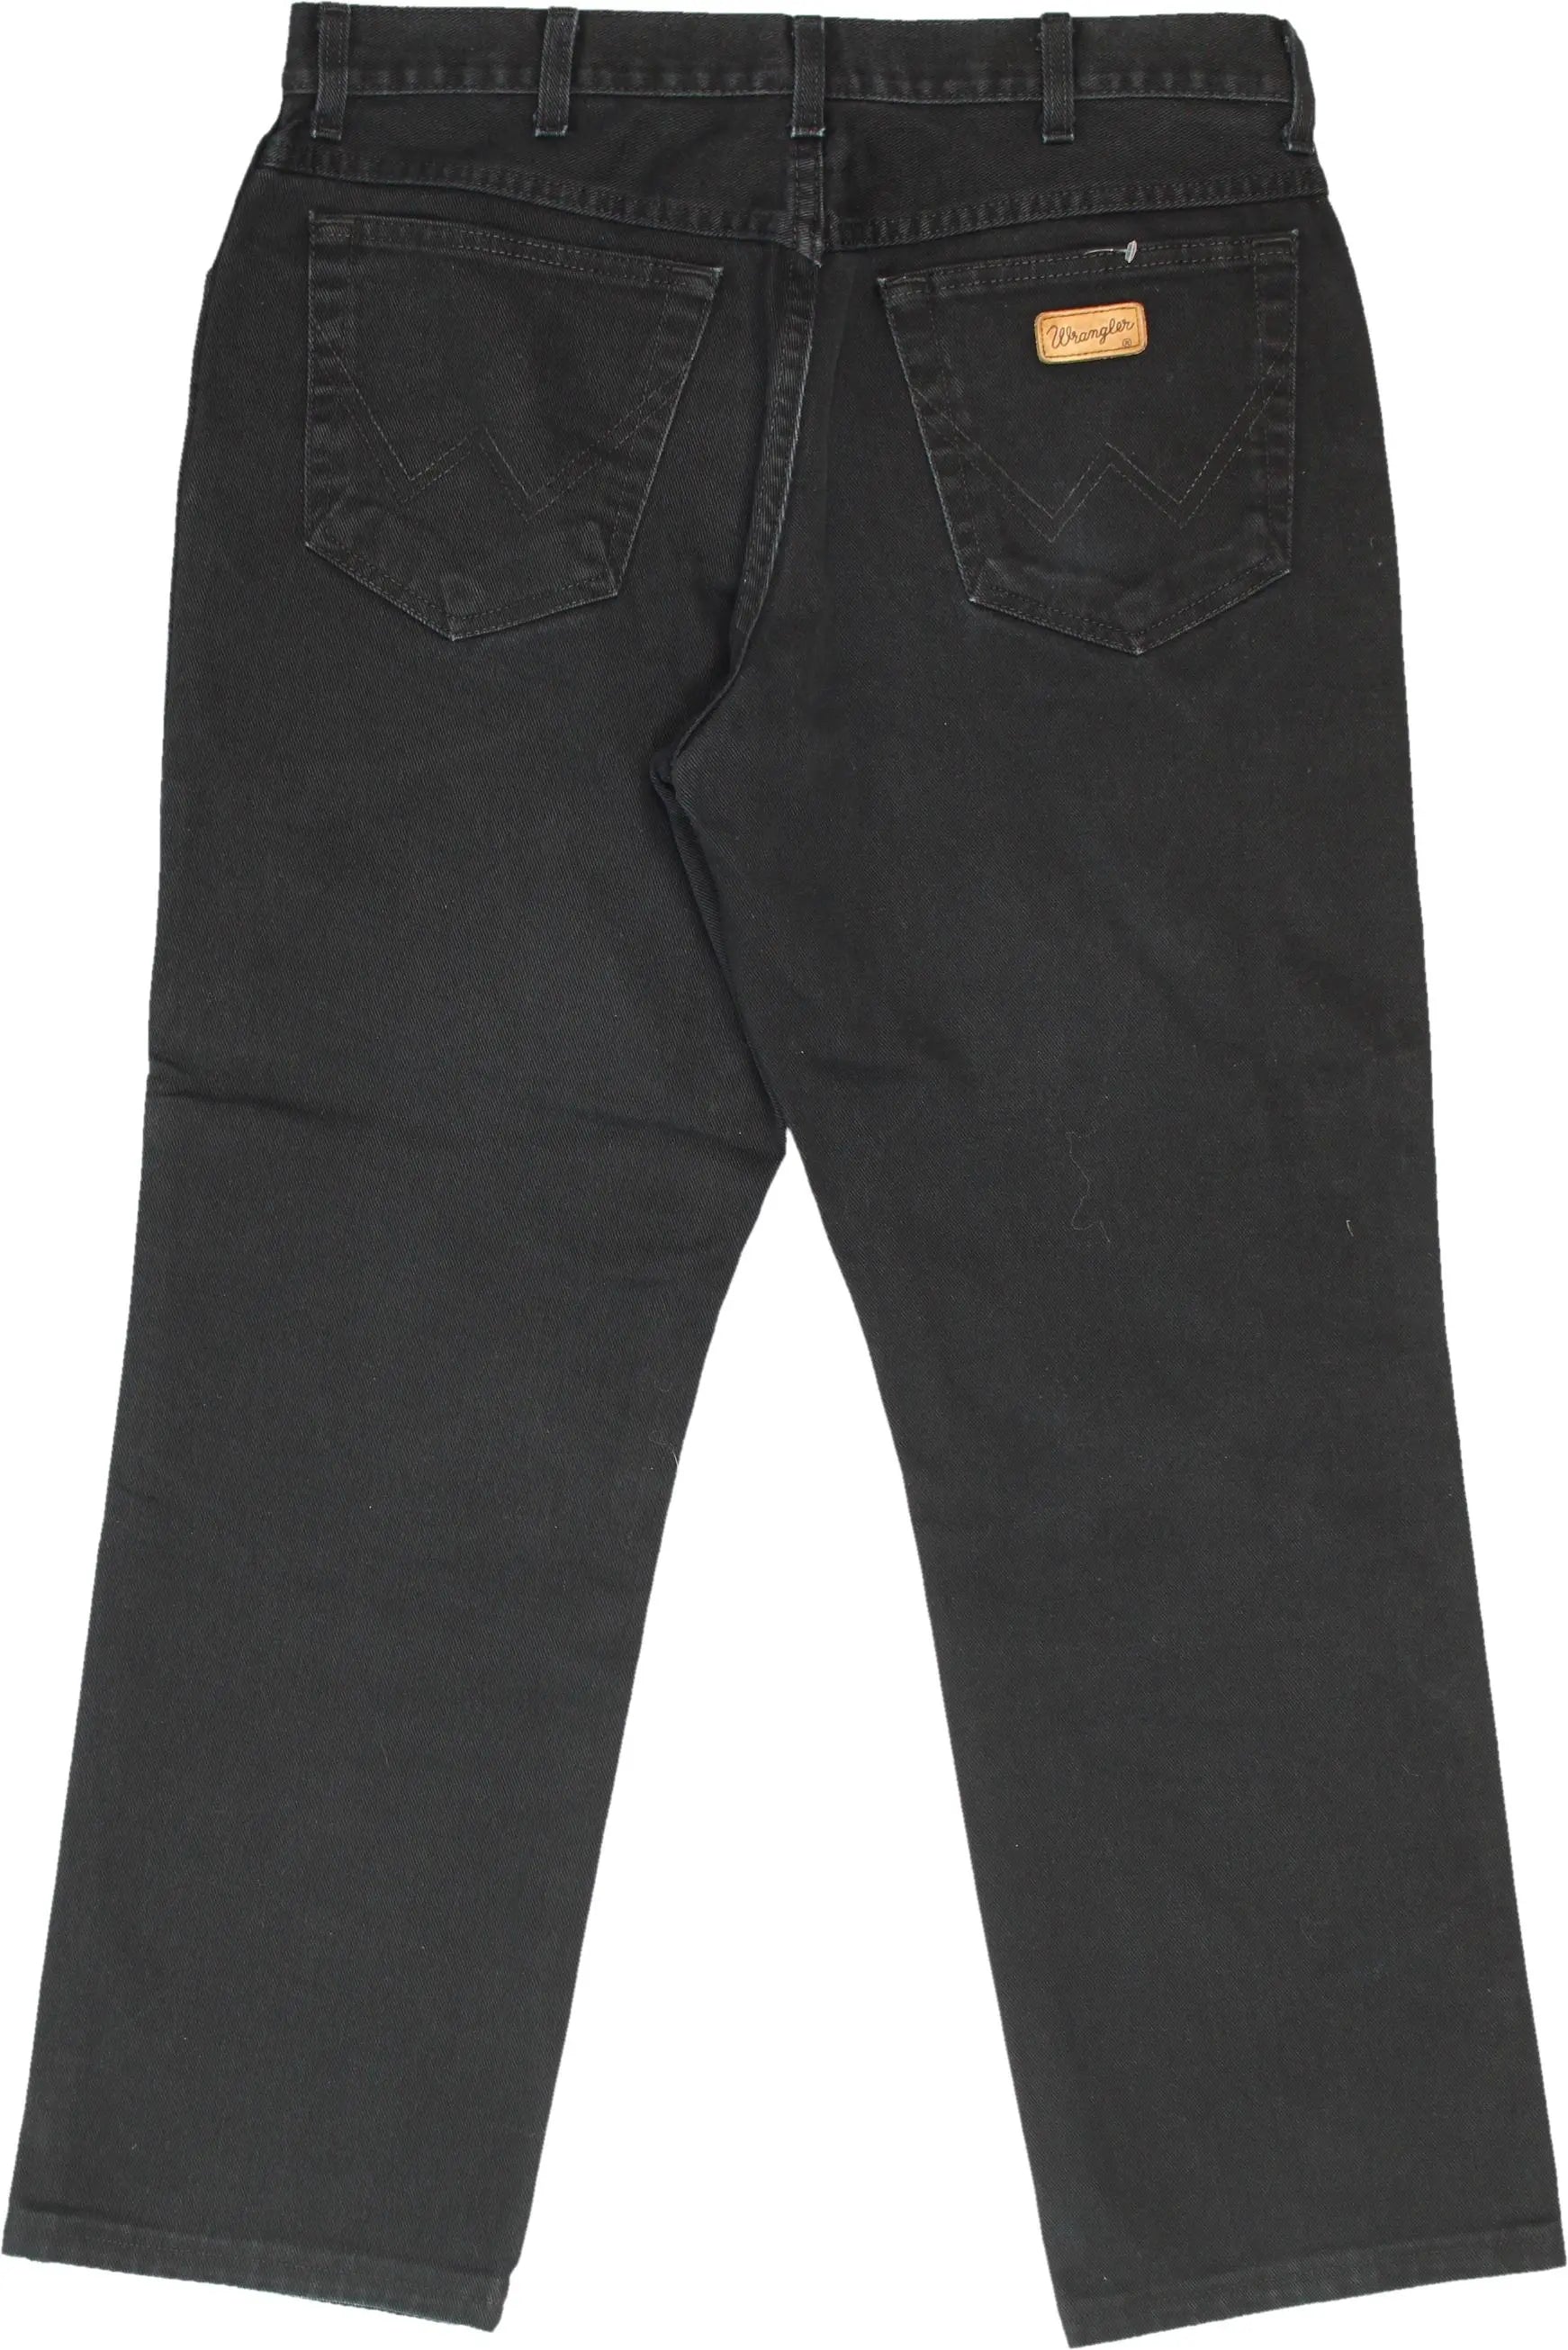 Wrangler - Wrangler Texas Regular Jeans- ThriftTale.com - Vintage and second handclothing